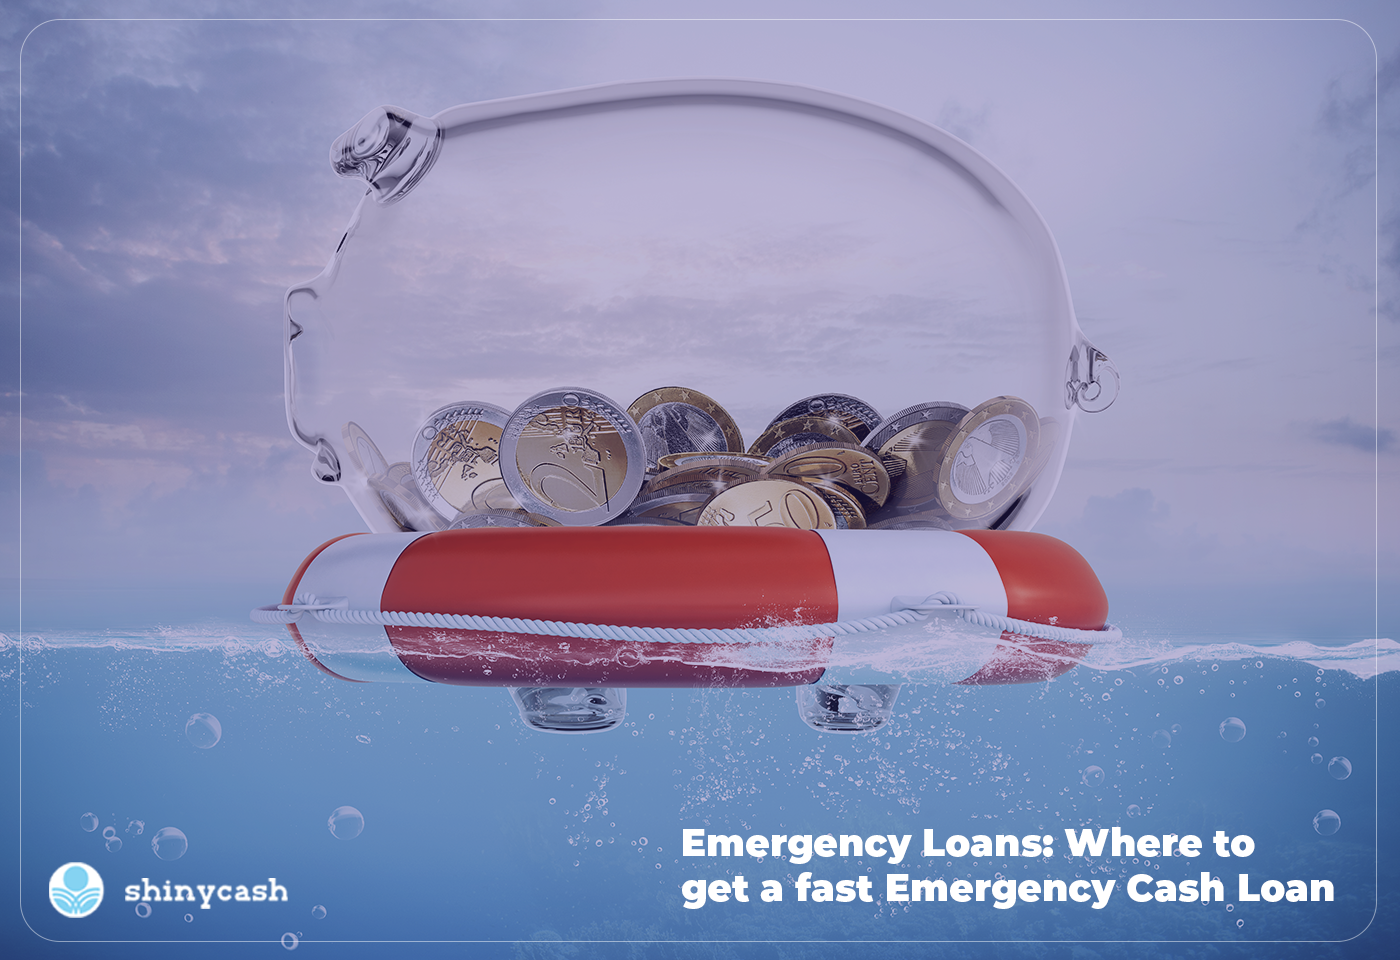 Emergency Loans: Where to get a fast Emergency Cash Loan